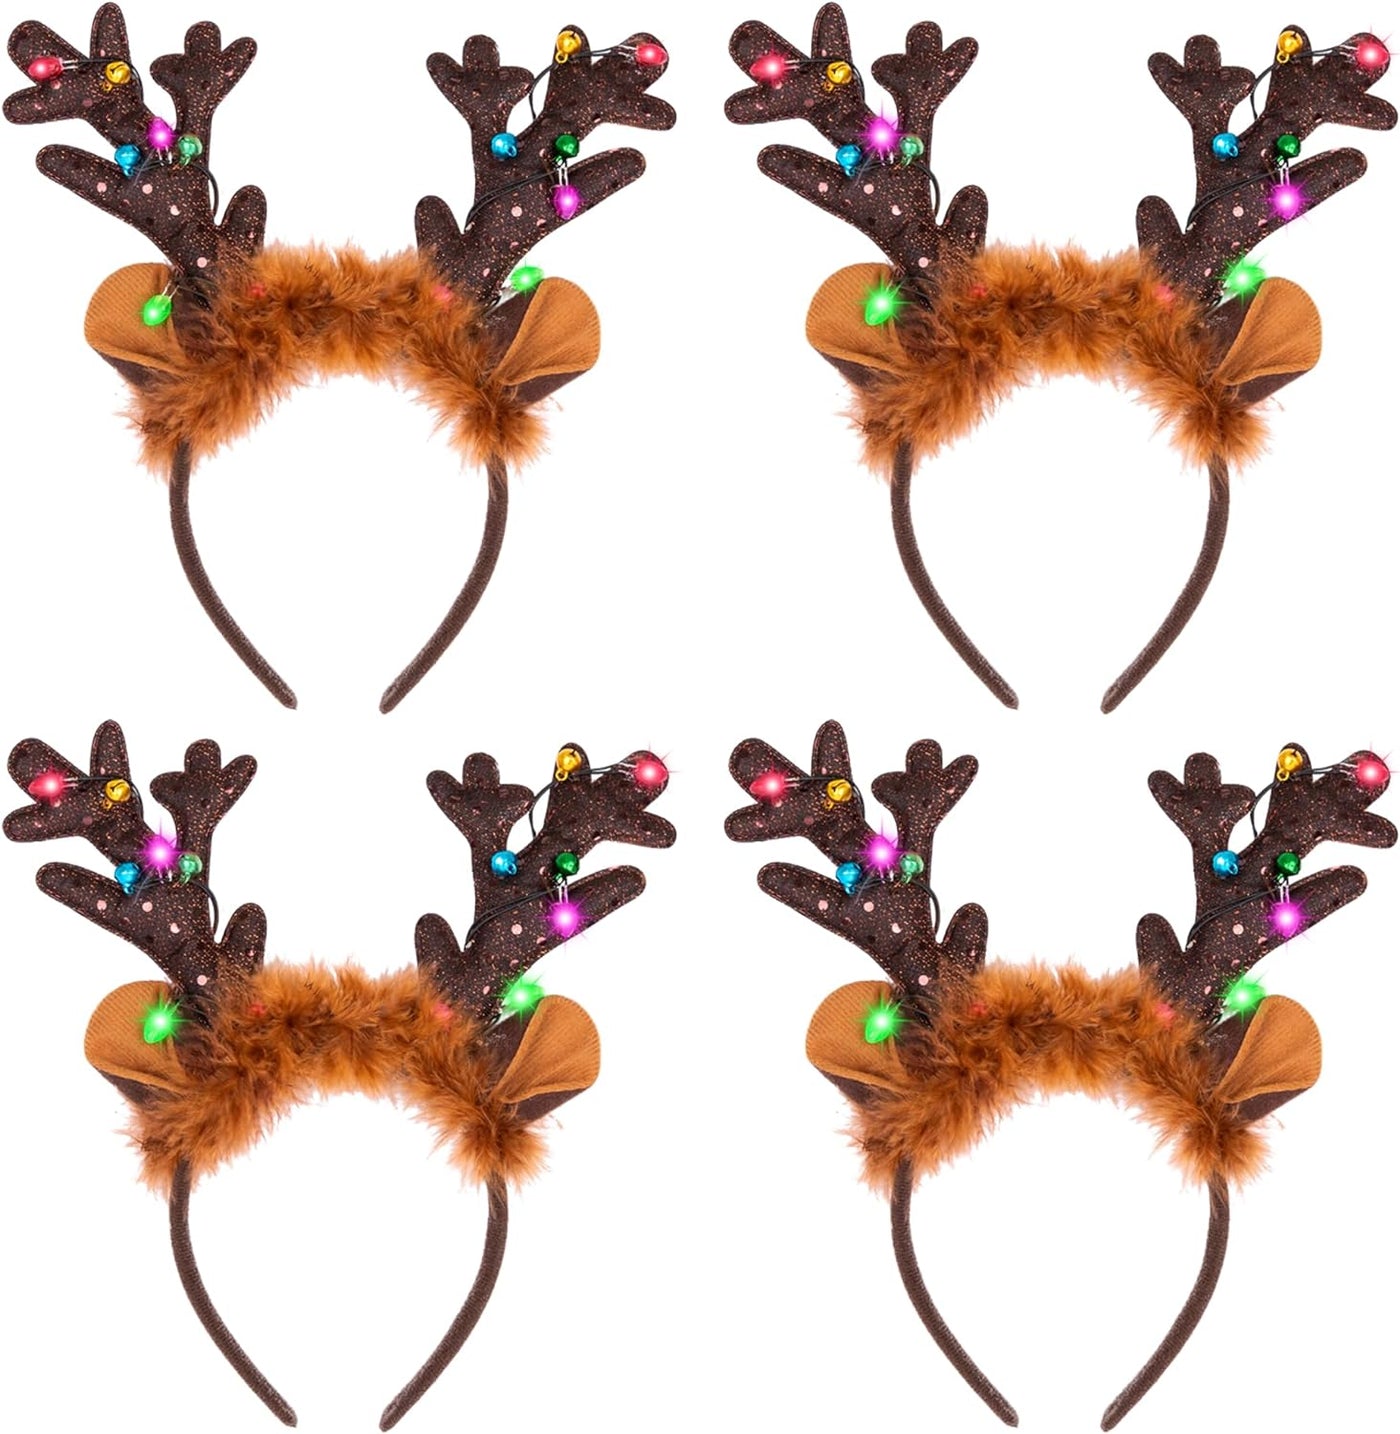 Light Up Christmas Reindeer Headbands - Set of 4 - Reindeer Ears Headbands with LED Lights and Jingling Bells